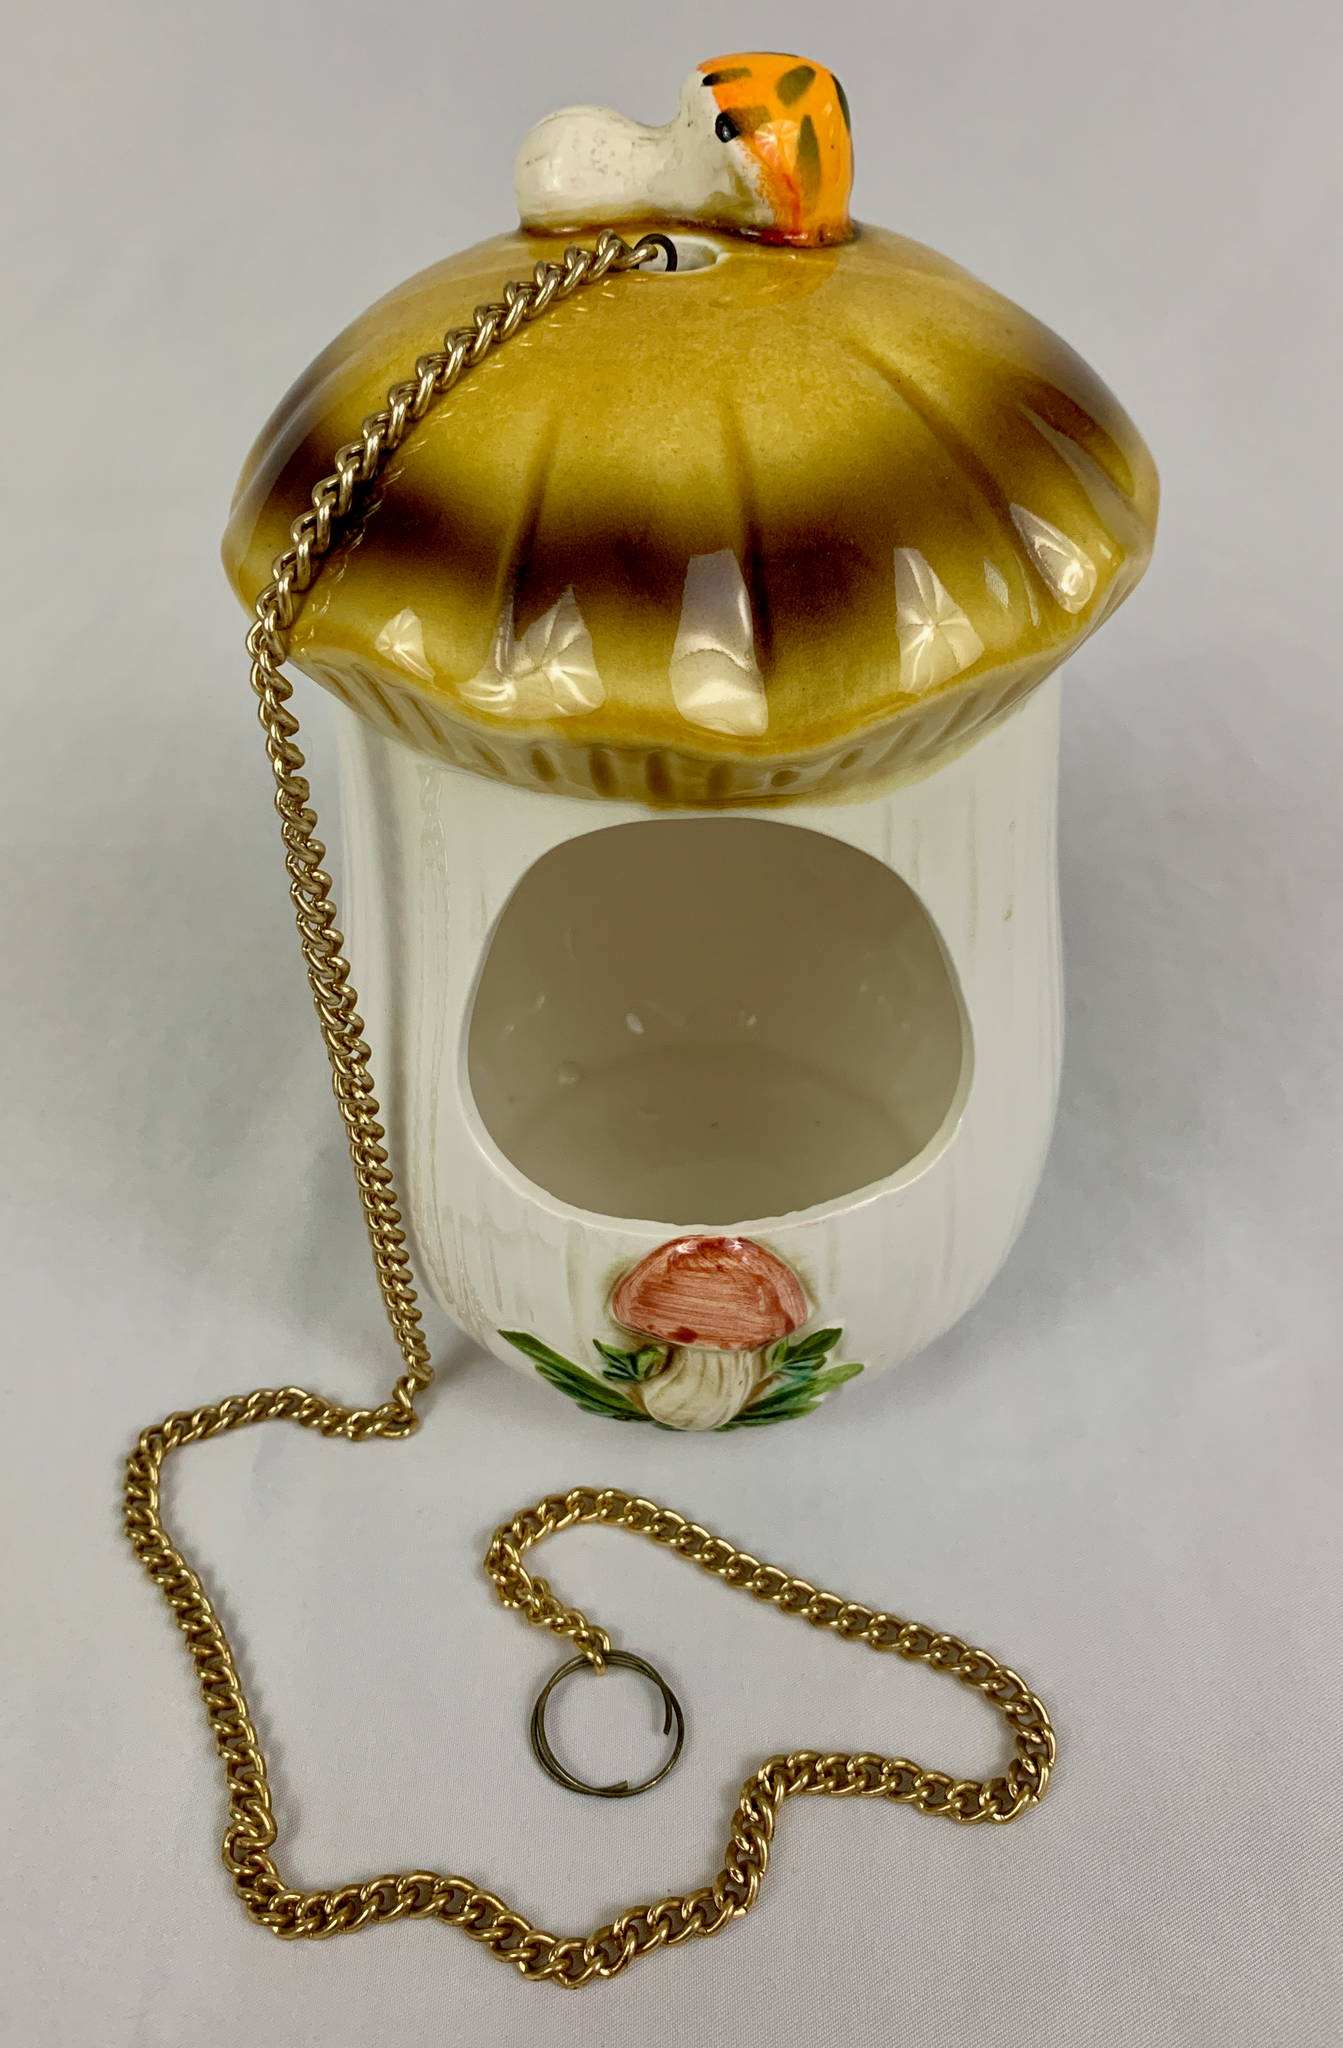 Mushroom Canister/ Cookie Jar by Arnel –